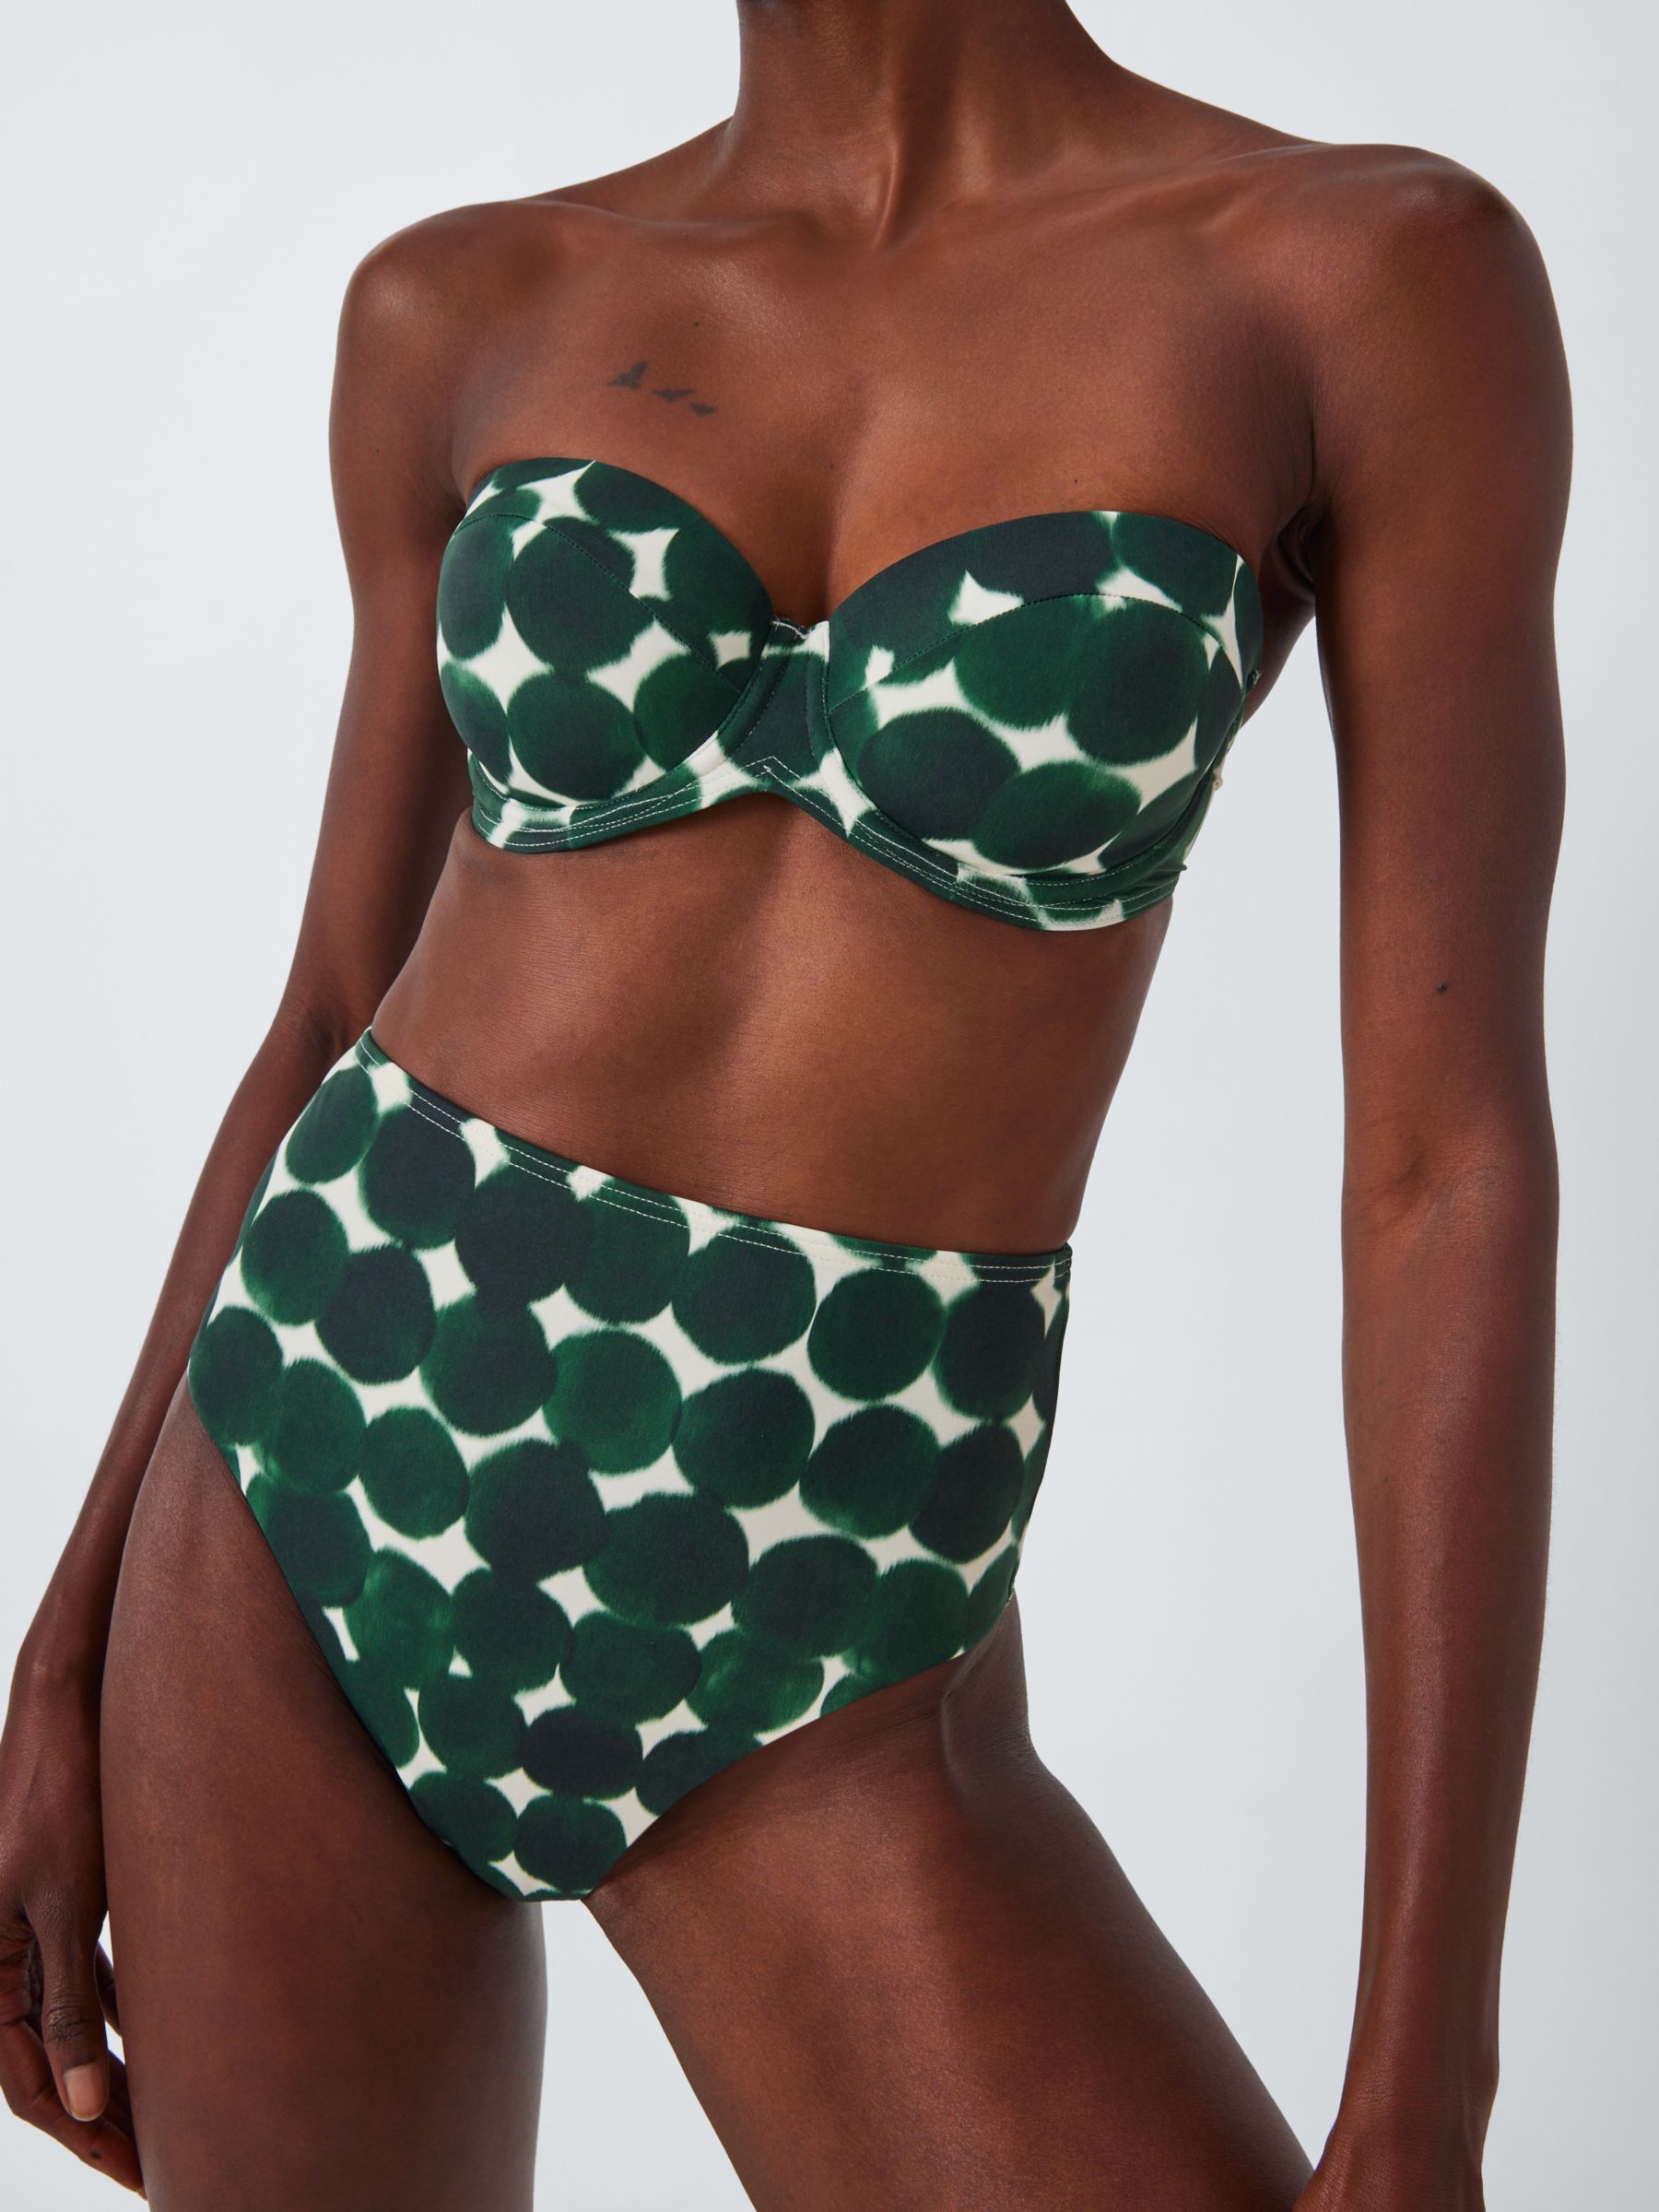 John Lewis Haze Spot Multiway Bikini Top, Dark Green, 32DD